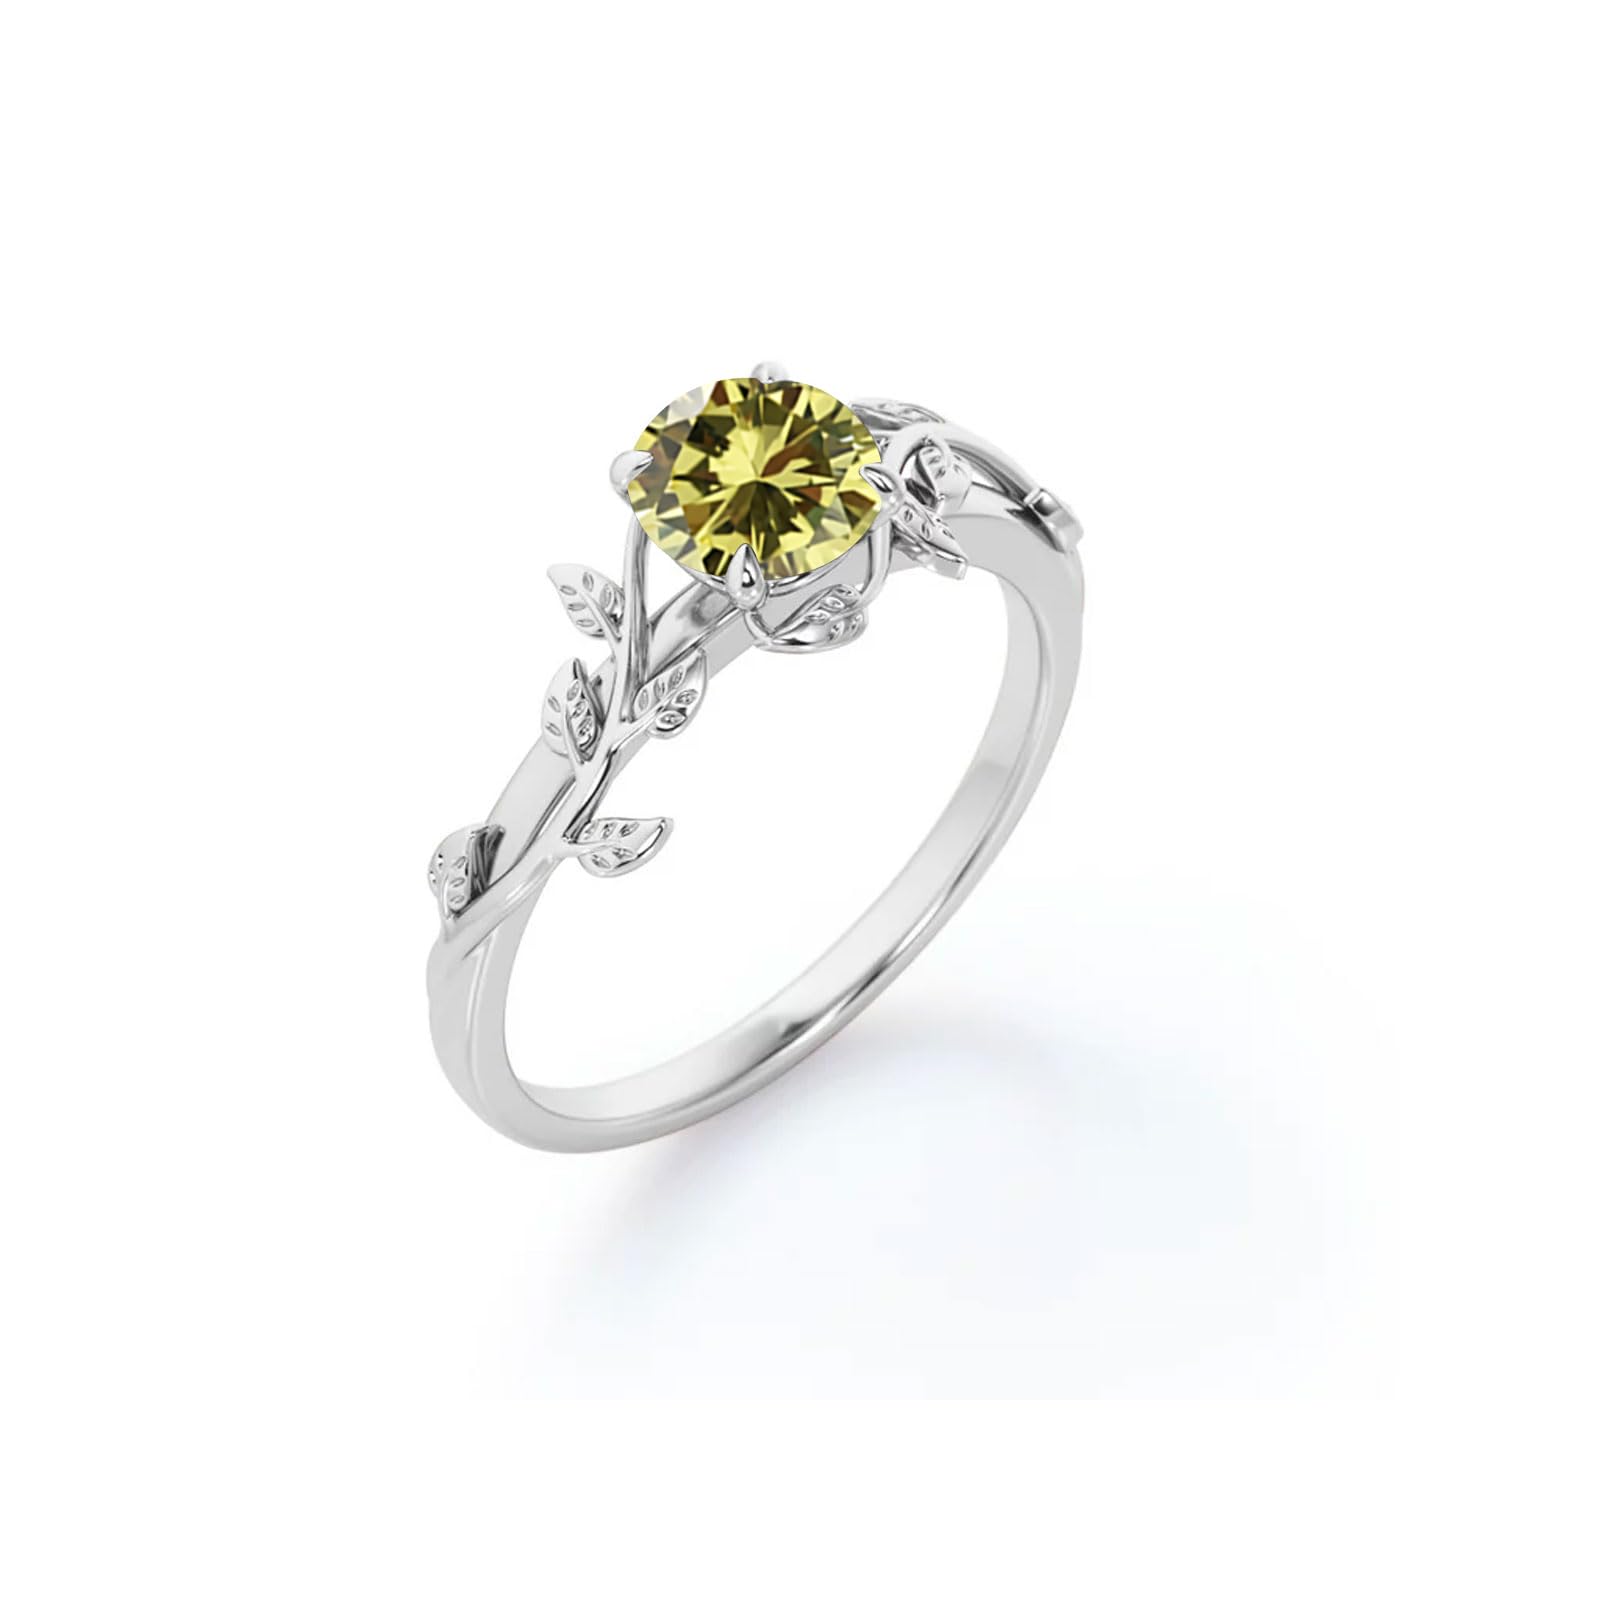 MRENITE Silver/10K/14K/18K Gold Leaf Design Vine Gemstone Ring for Women 1 Carat Twig Art Deco Round Birthstone Statement Ring Jewelry Gift for Her